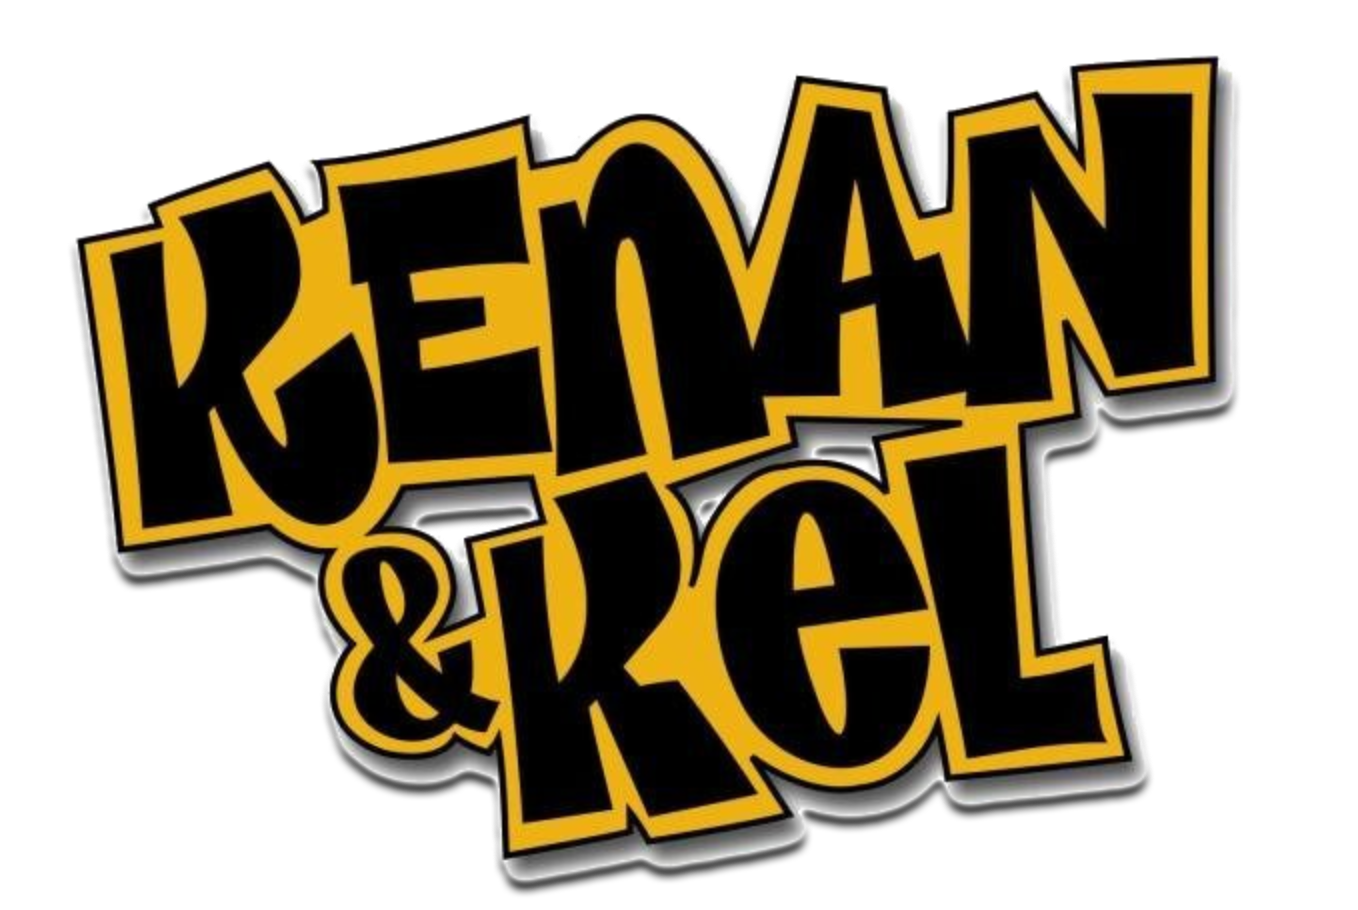 Kenan and Kel Volume 1 and 2 (7 DVDs Box Set)